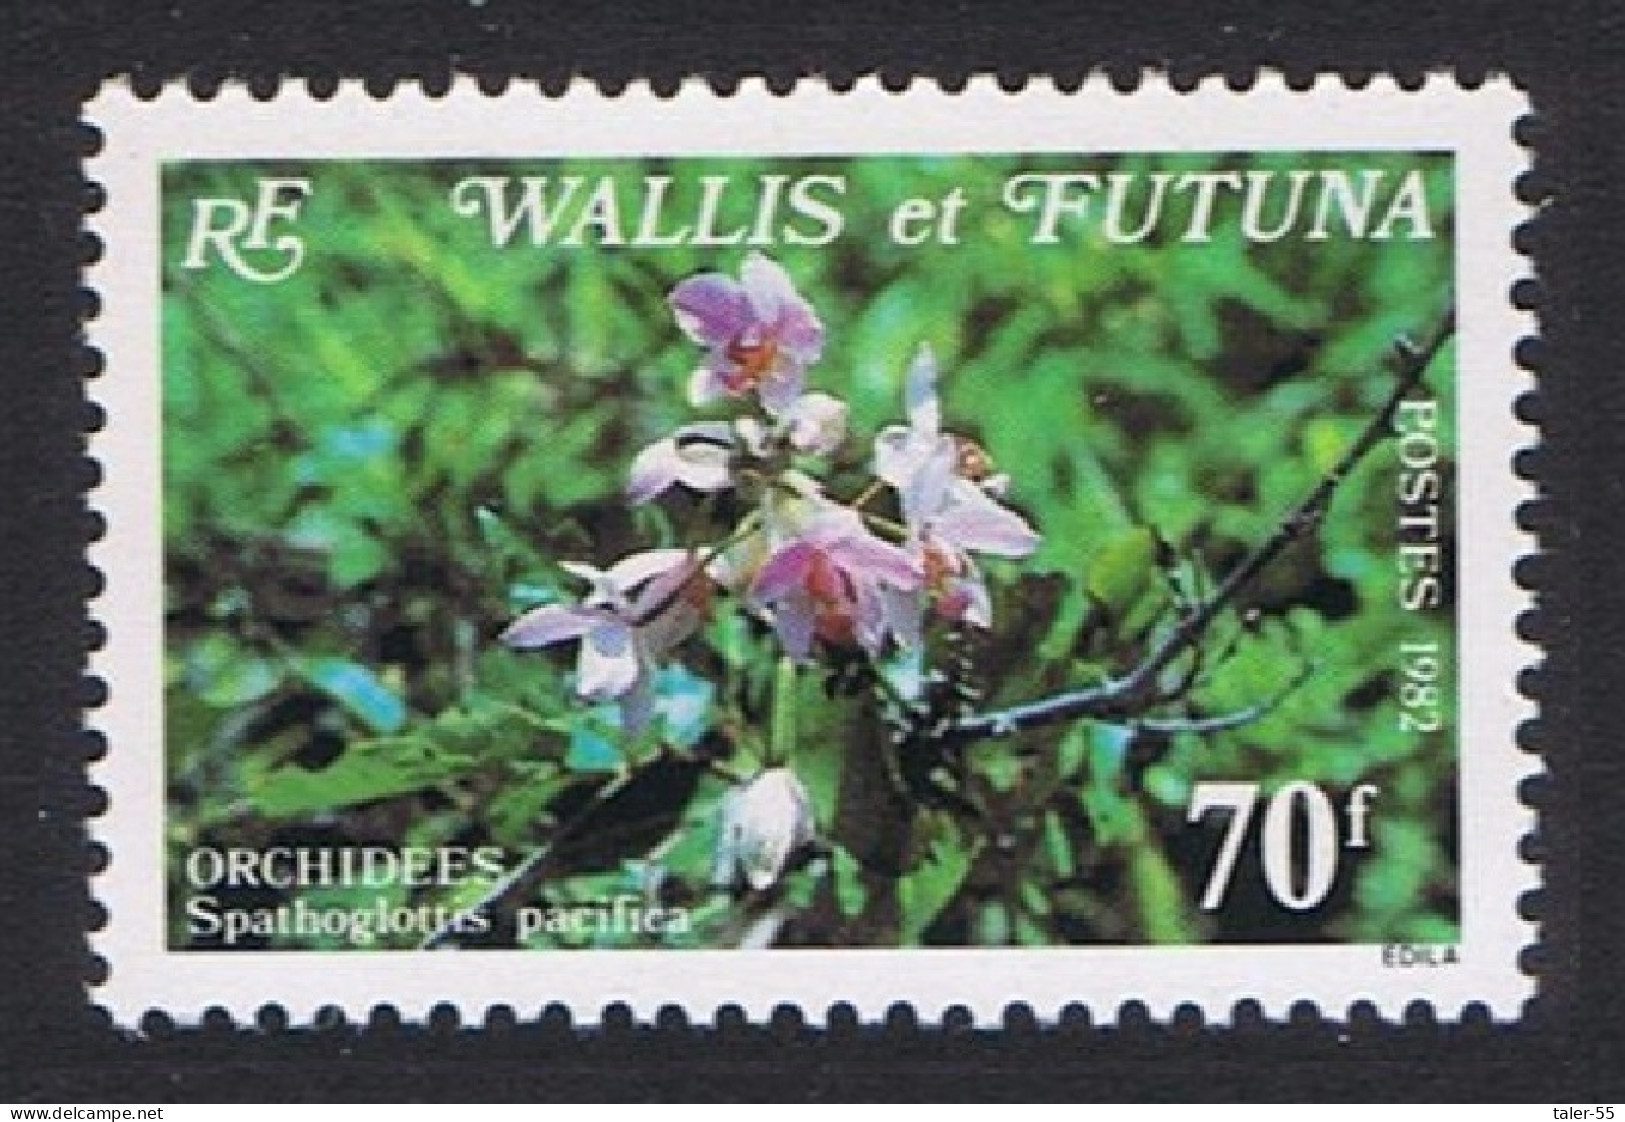 Wallis And Futuna Orchids Spathoglottis Pacifica 70f 1982 MNH SG#398 Sc#285 - Nuovi